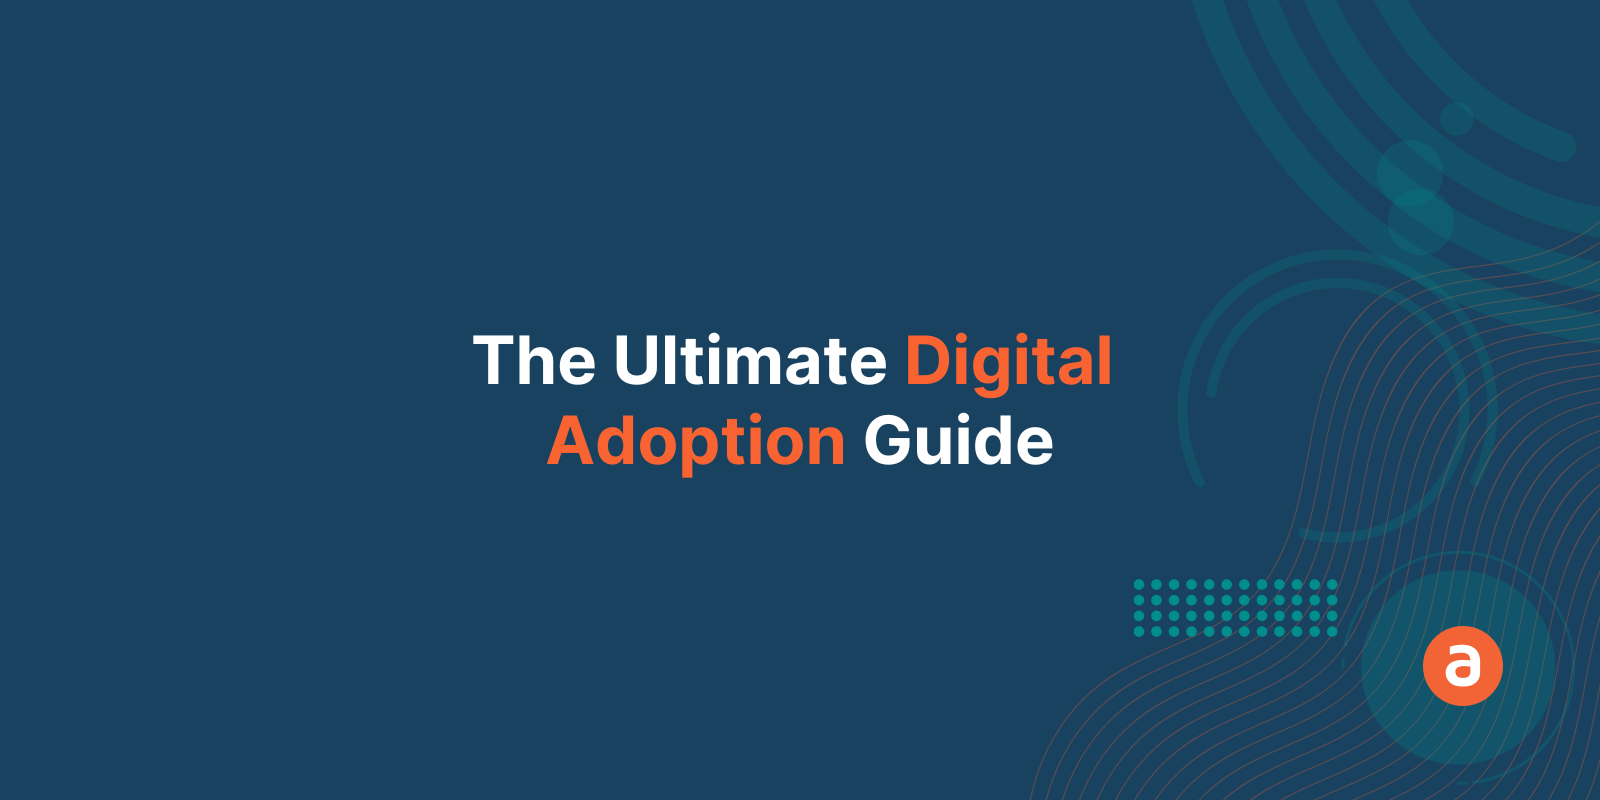 The Ultimate Digital Adoption Guide